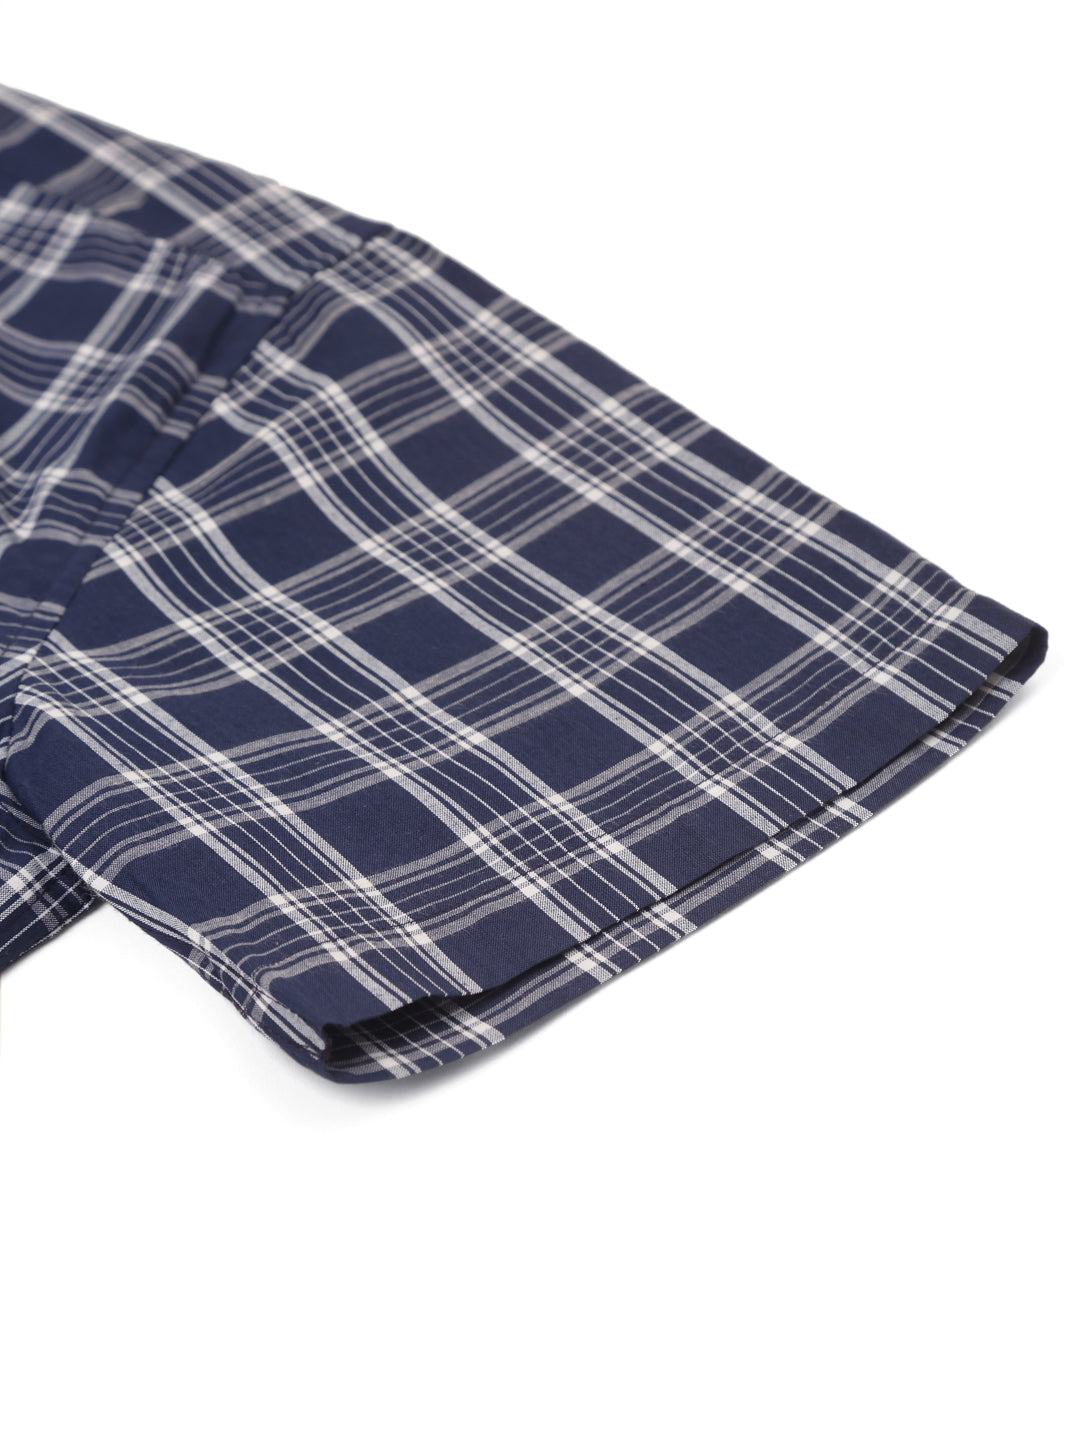 Men's Cotton Checked Half Sleeve Formal Shirts ( SF 808Blue ) - Jainish